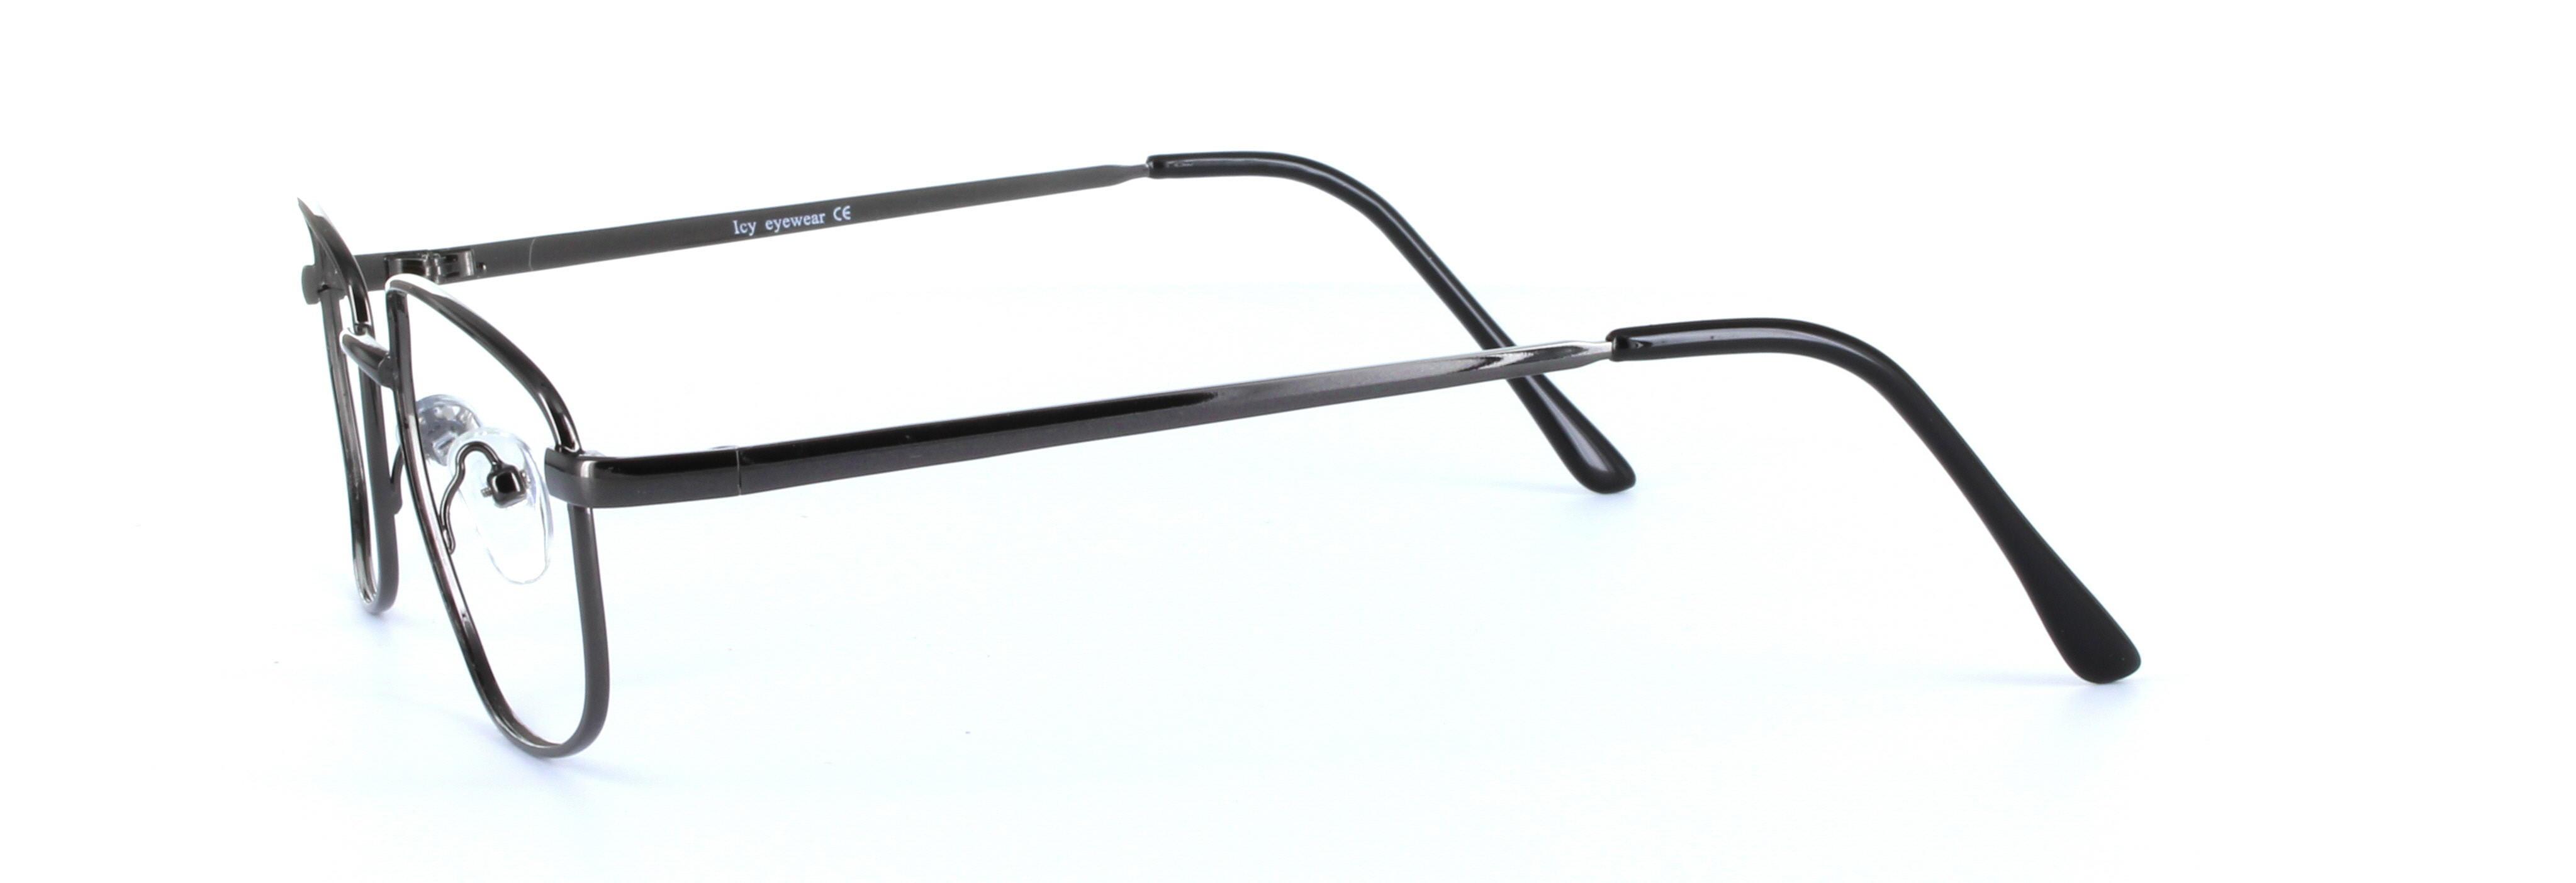 Ashton Gunmetal Full Rim Rectangular Metal Glasses - Image View 2